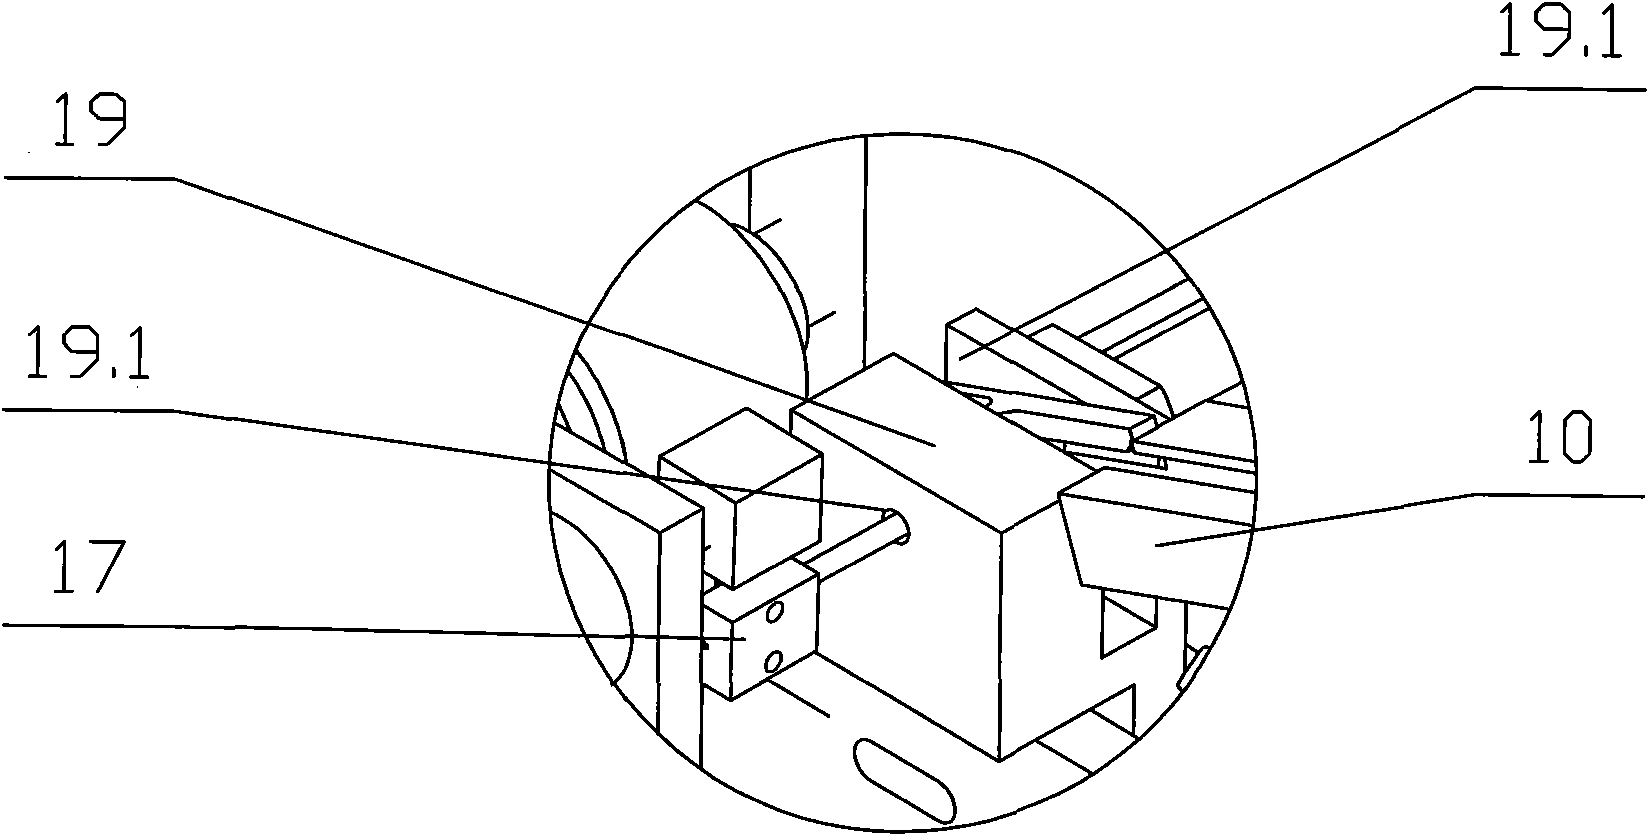 Full-automatic screw welder